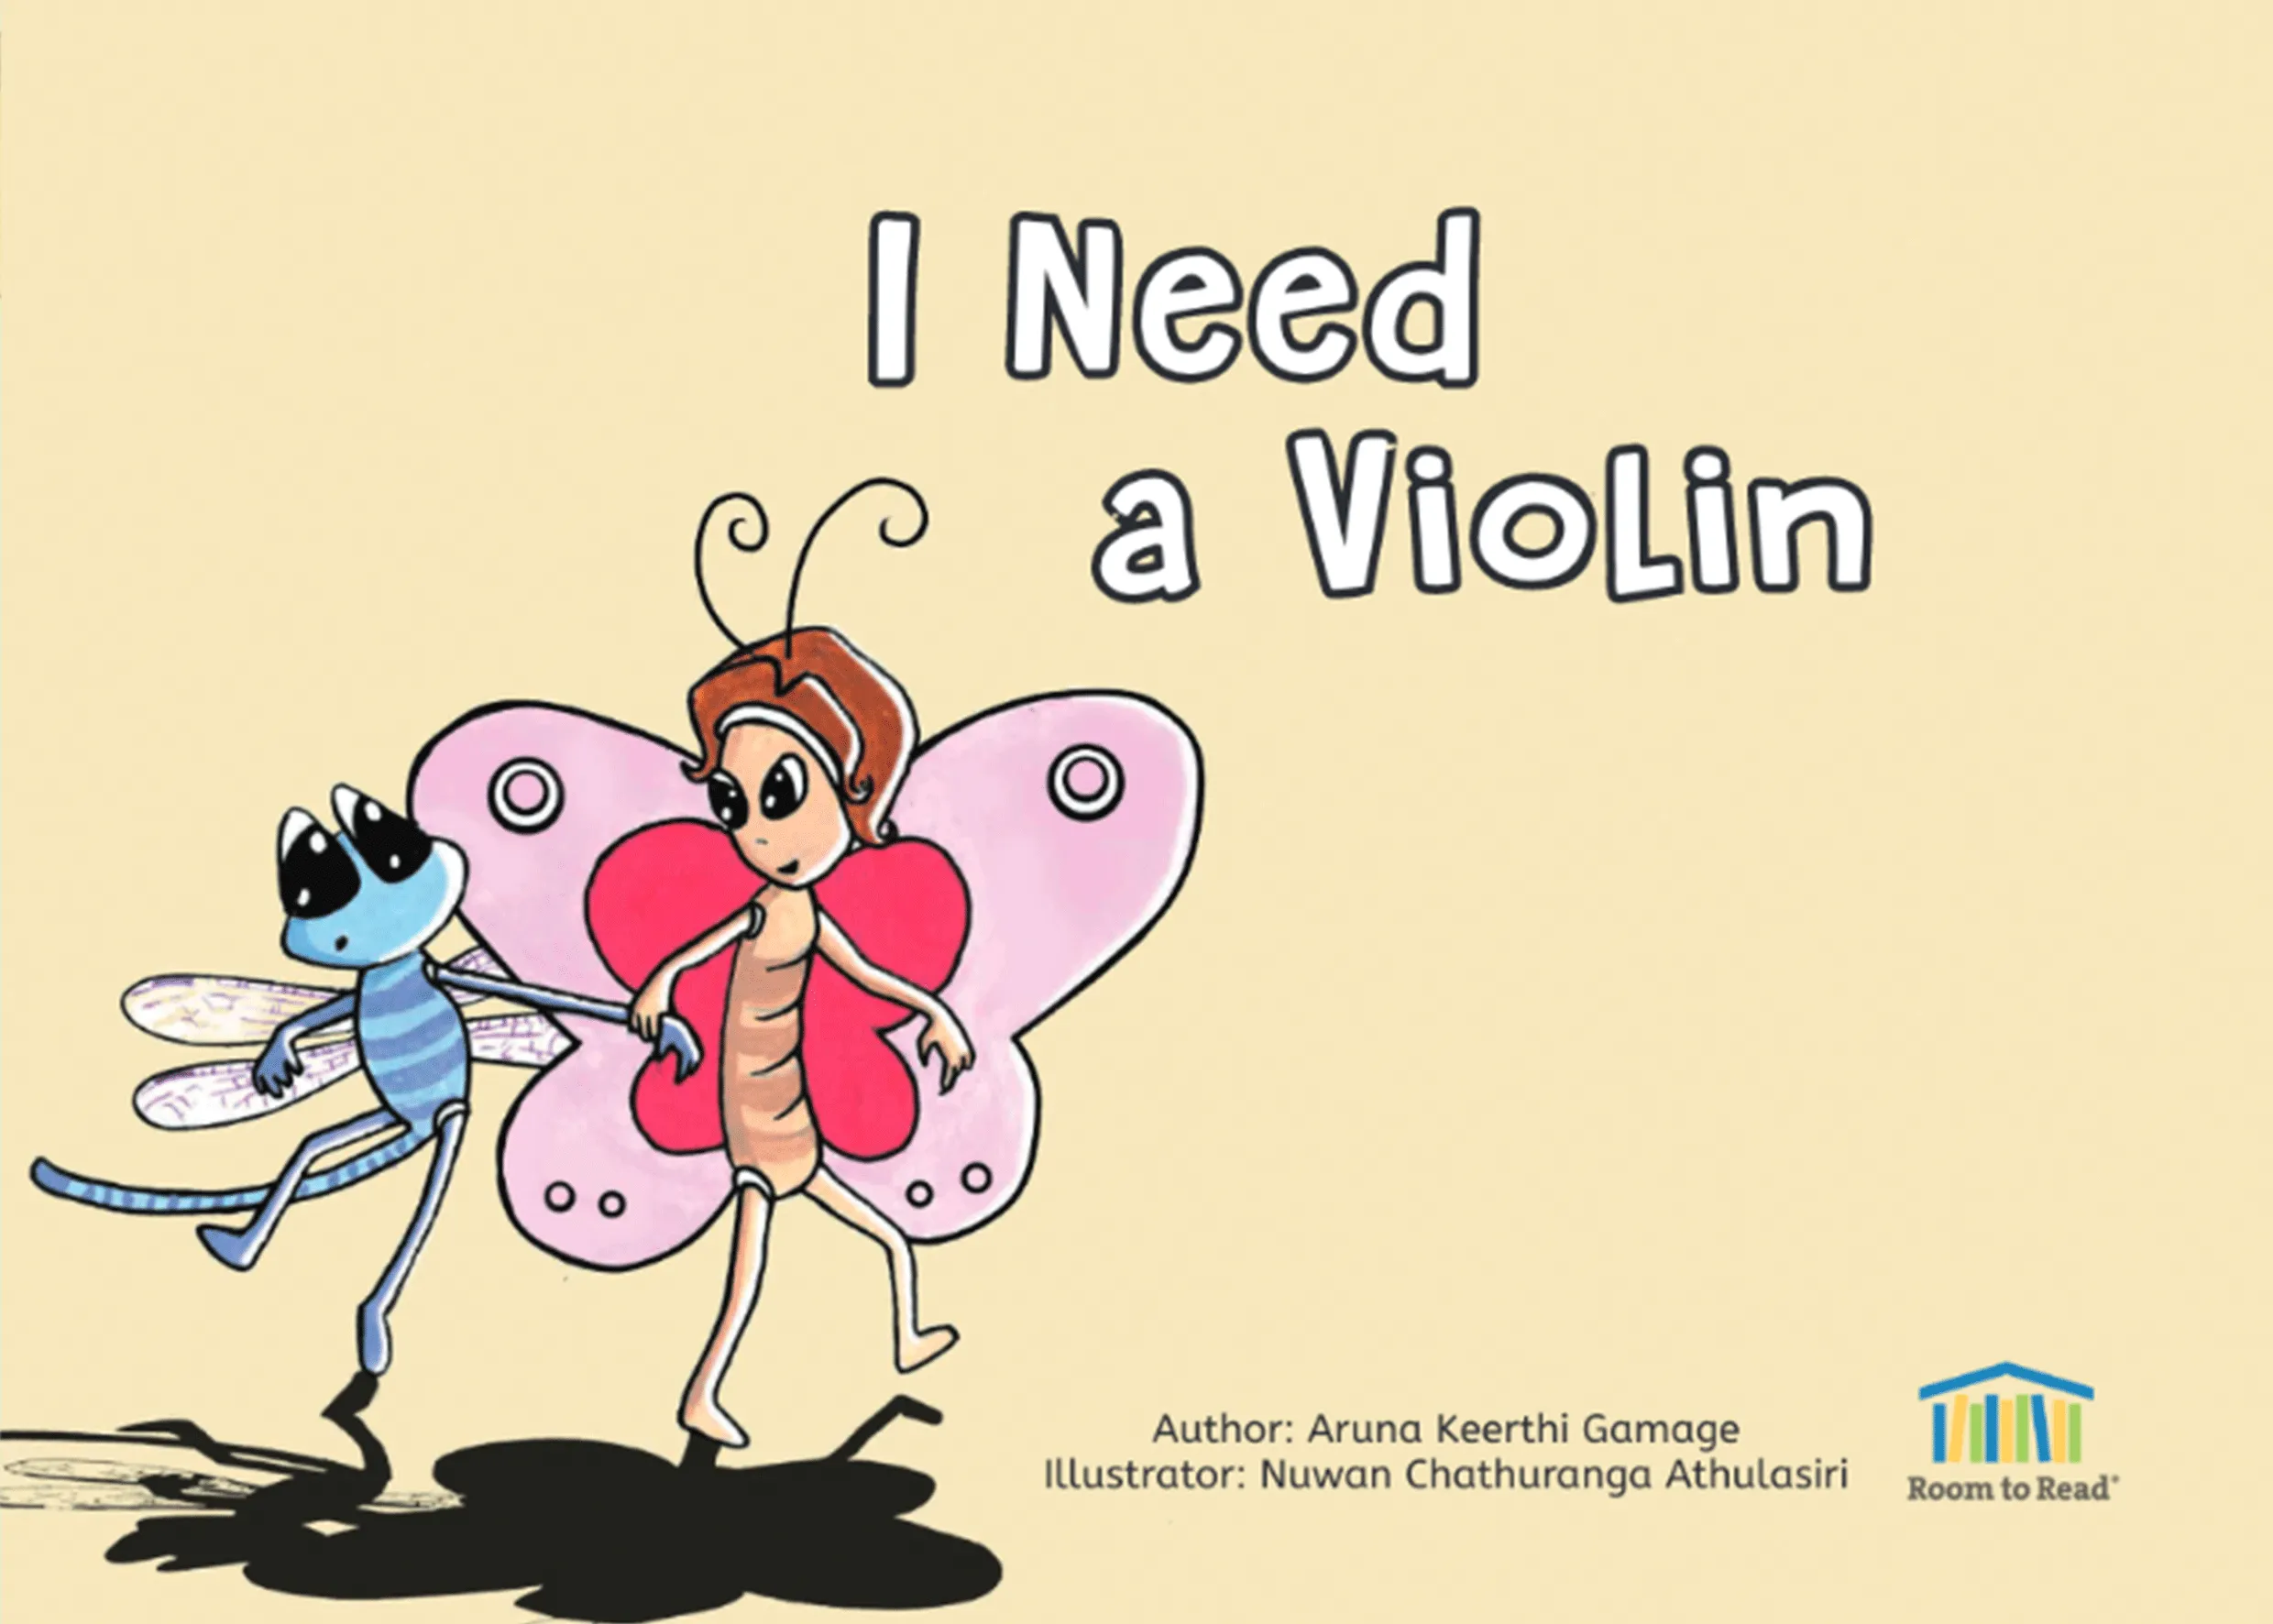 I Need a Violin